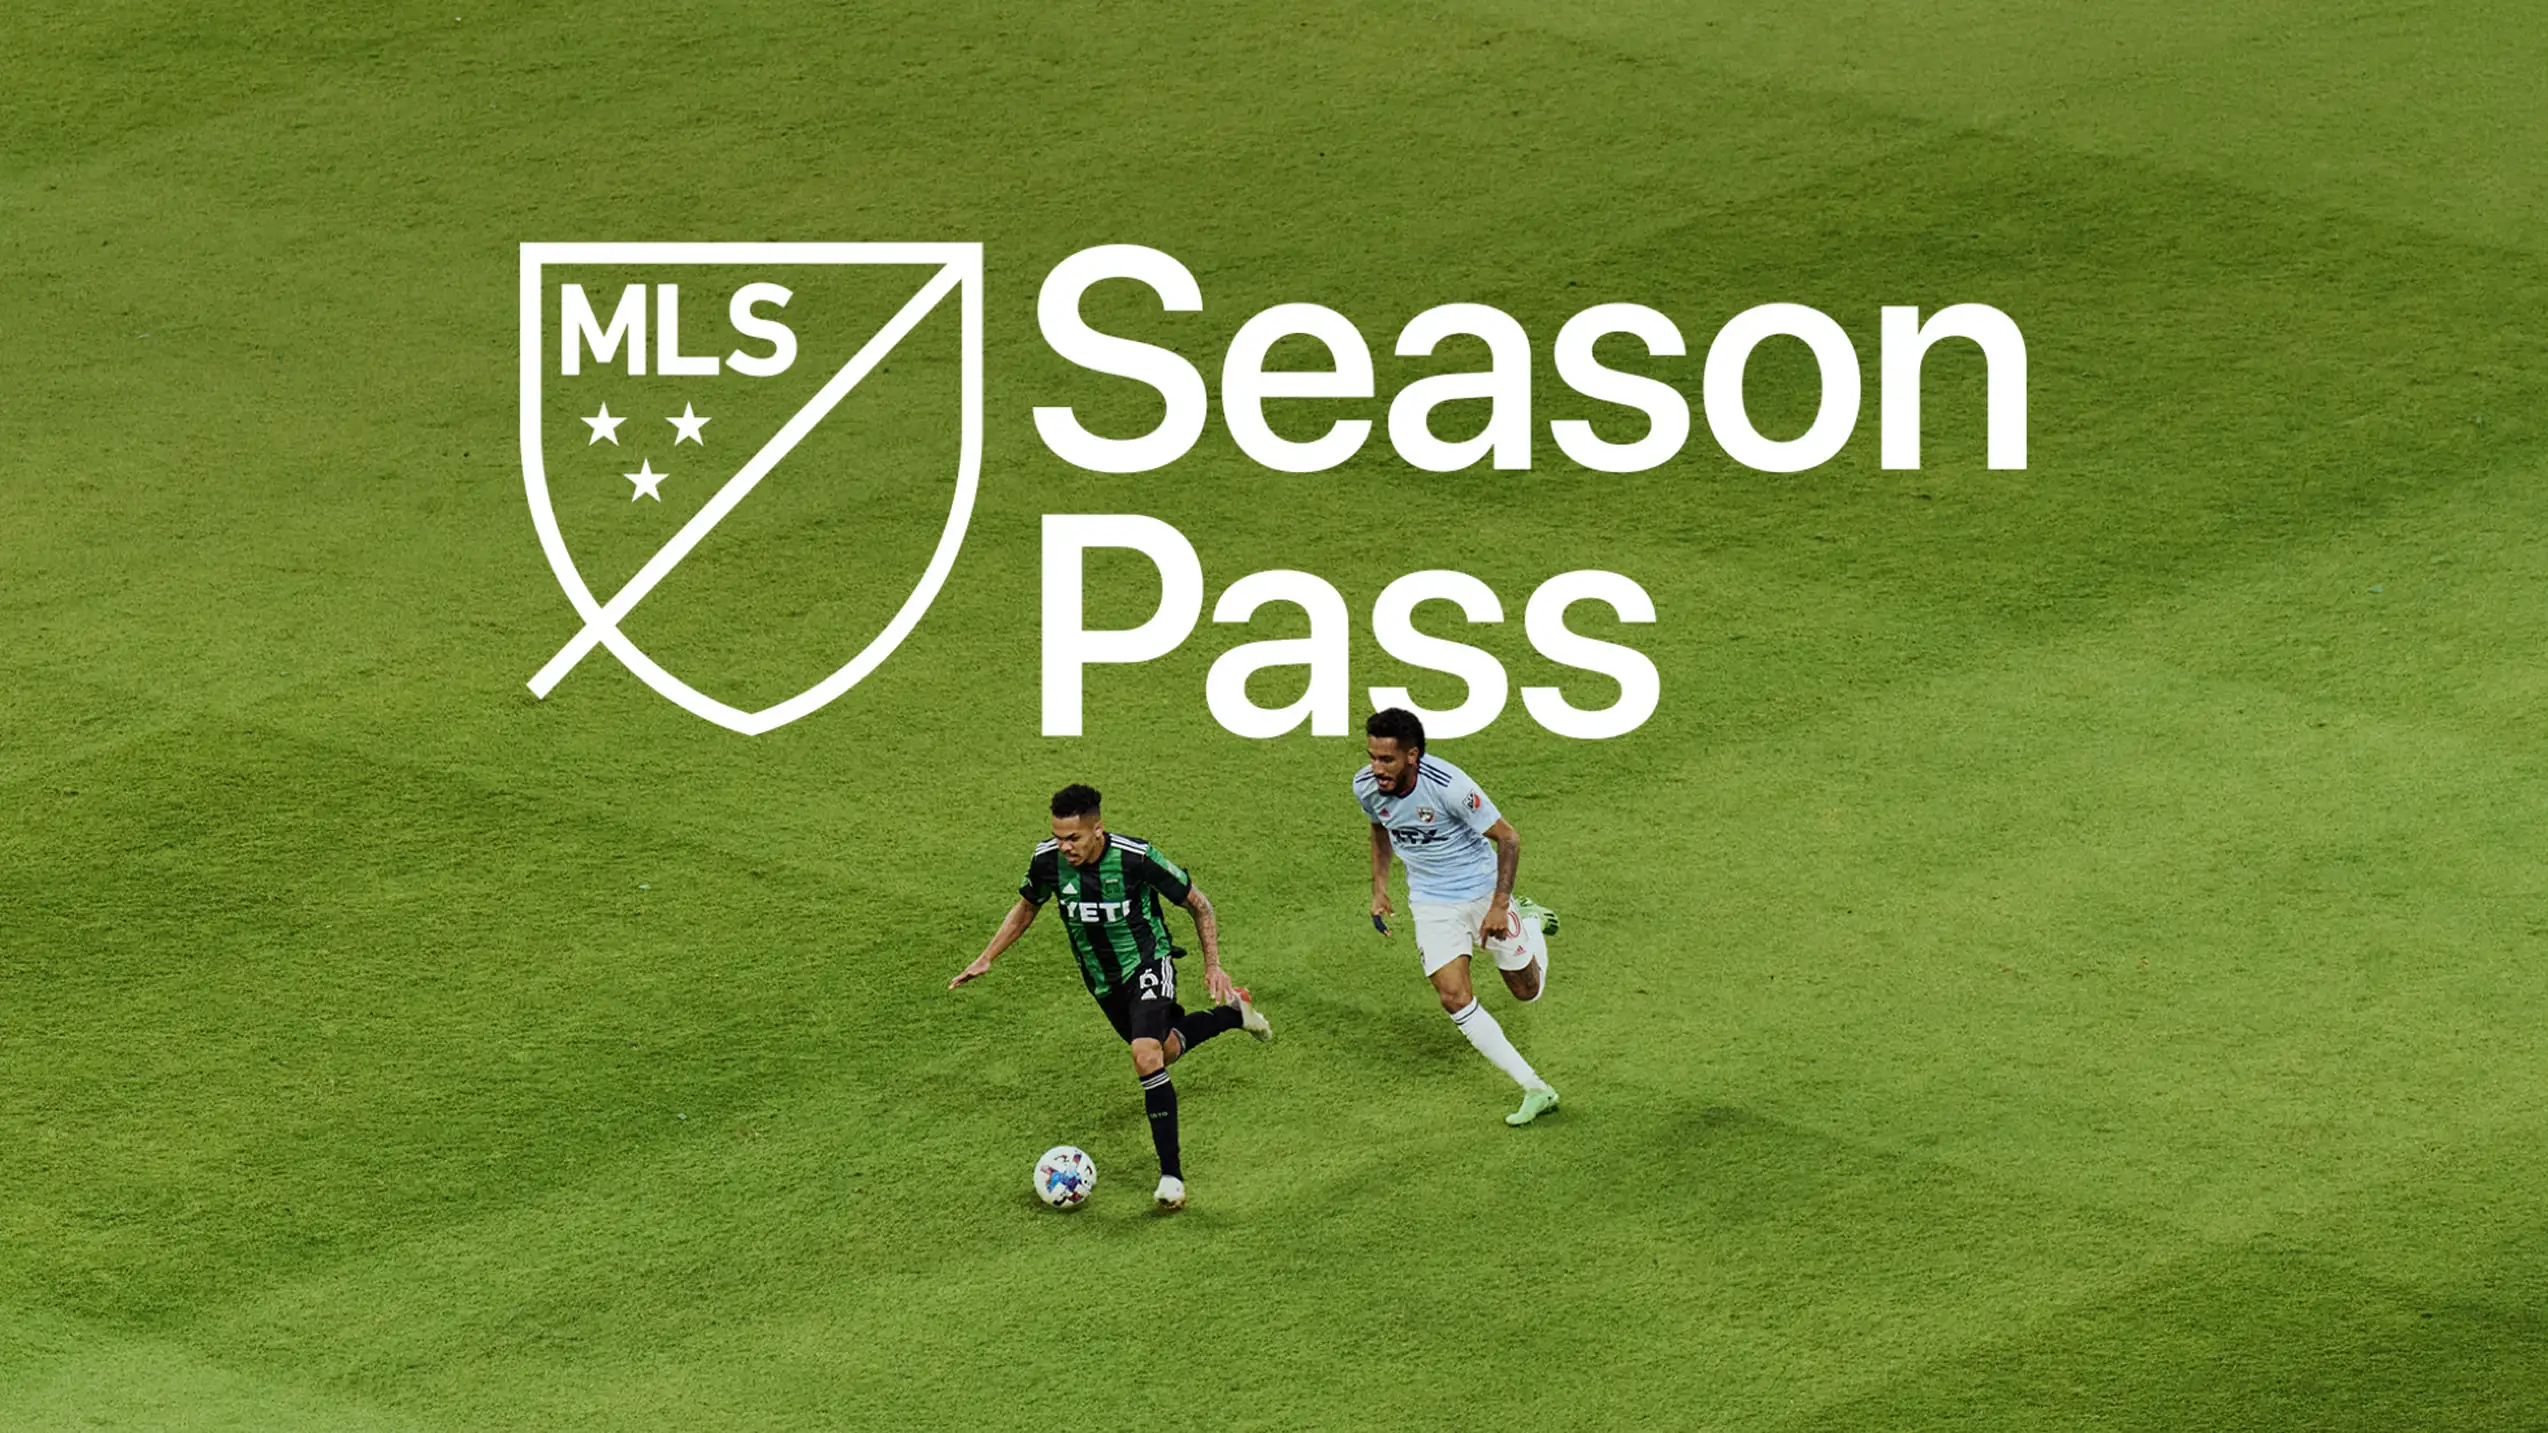 Cancel MLS Season Pass